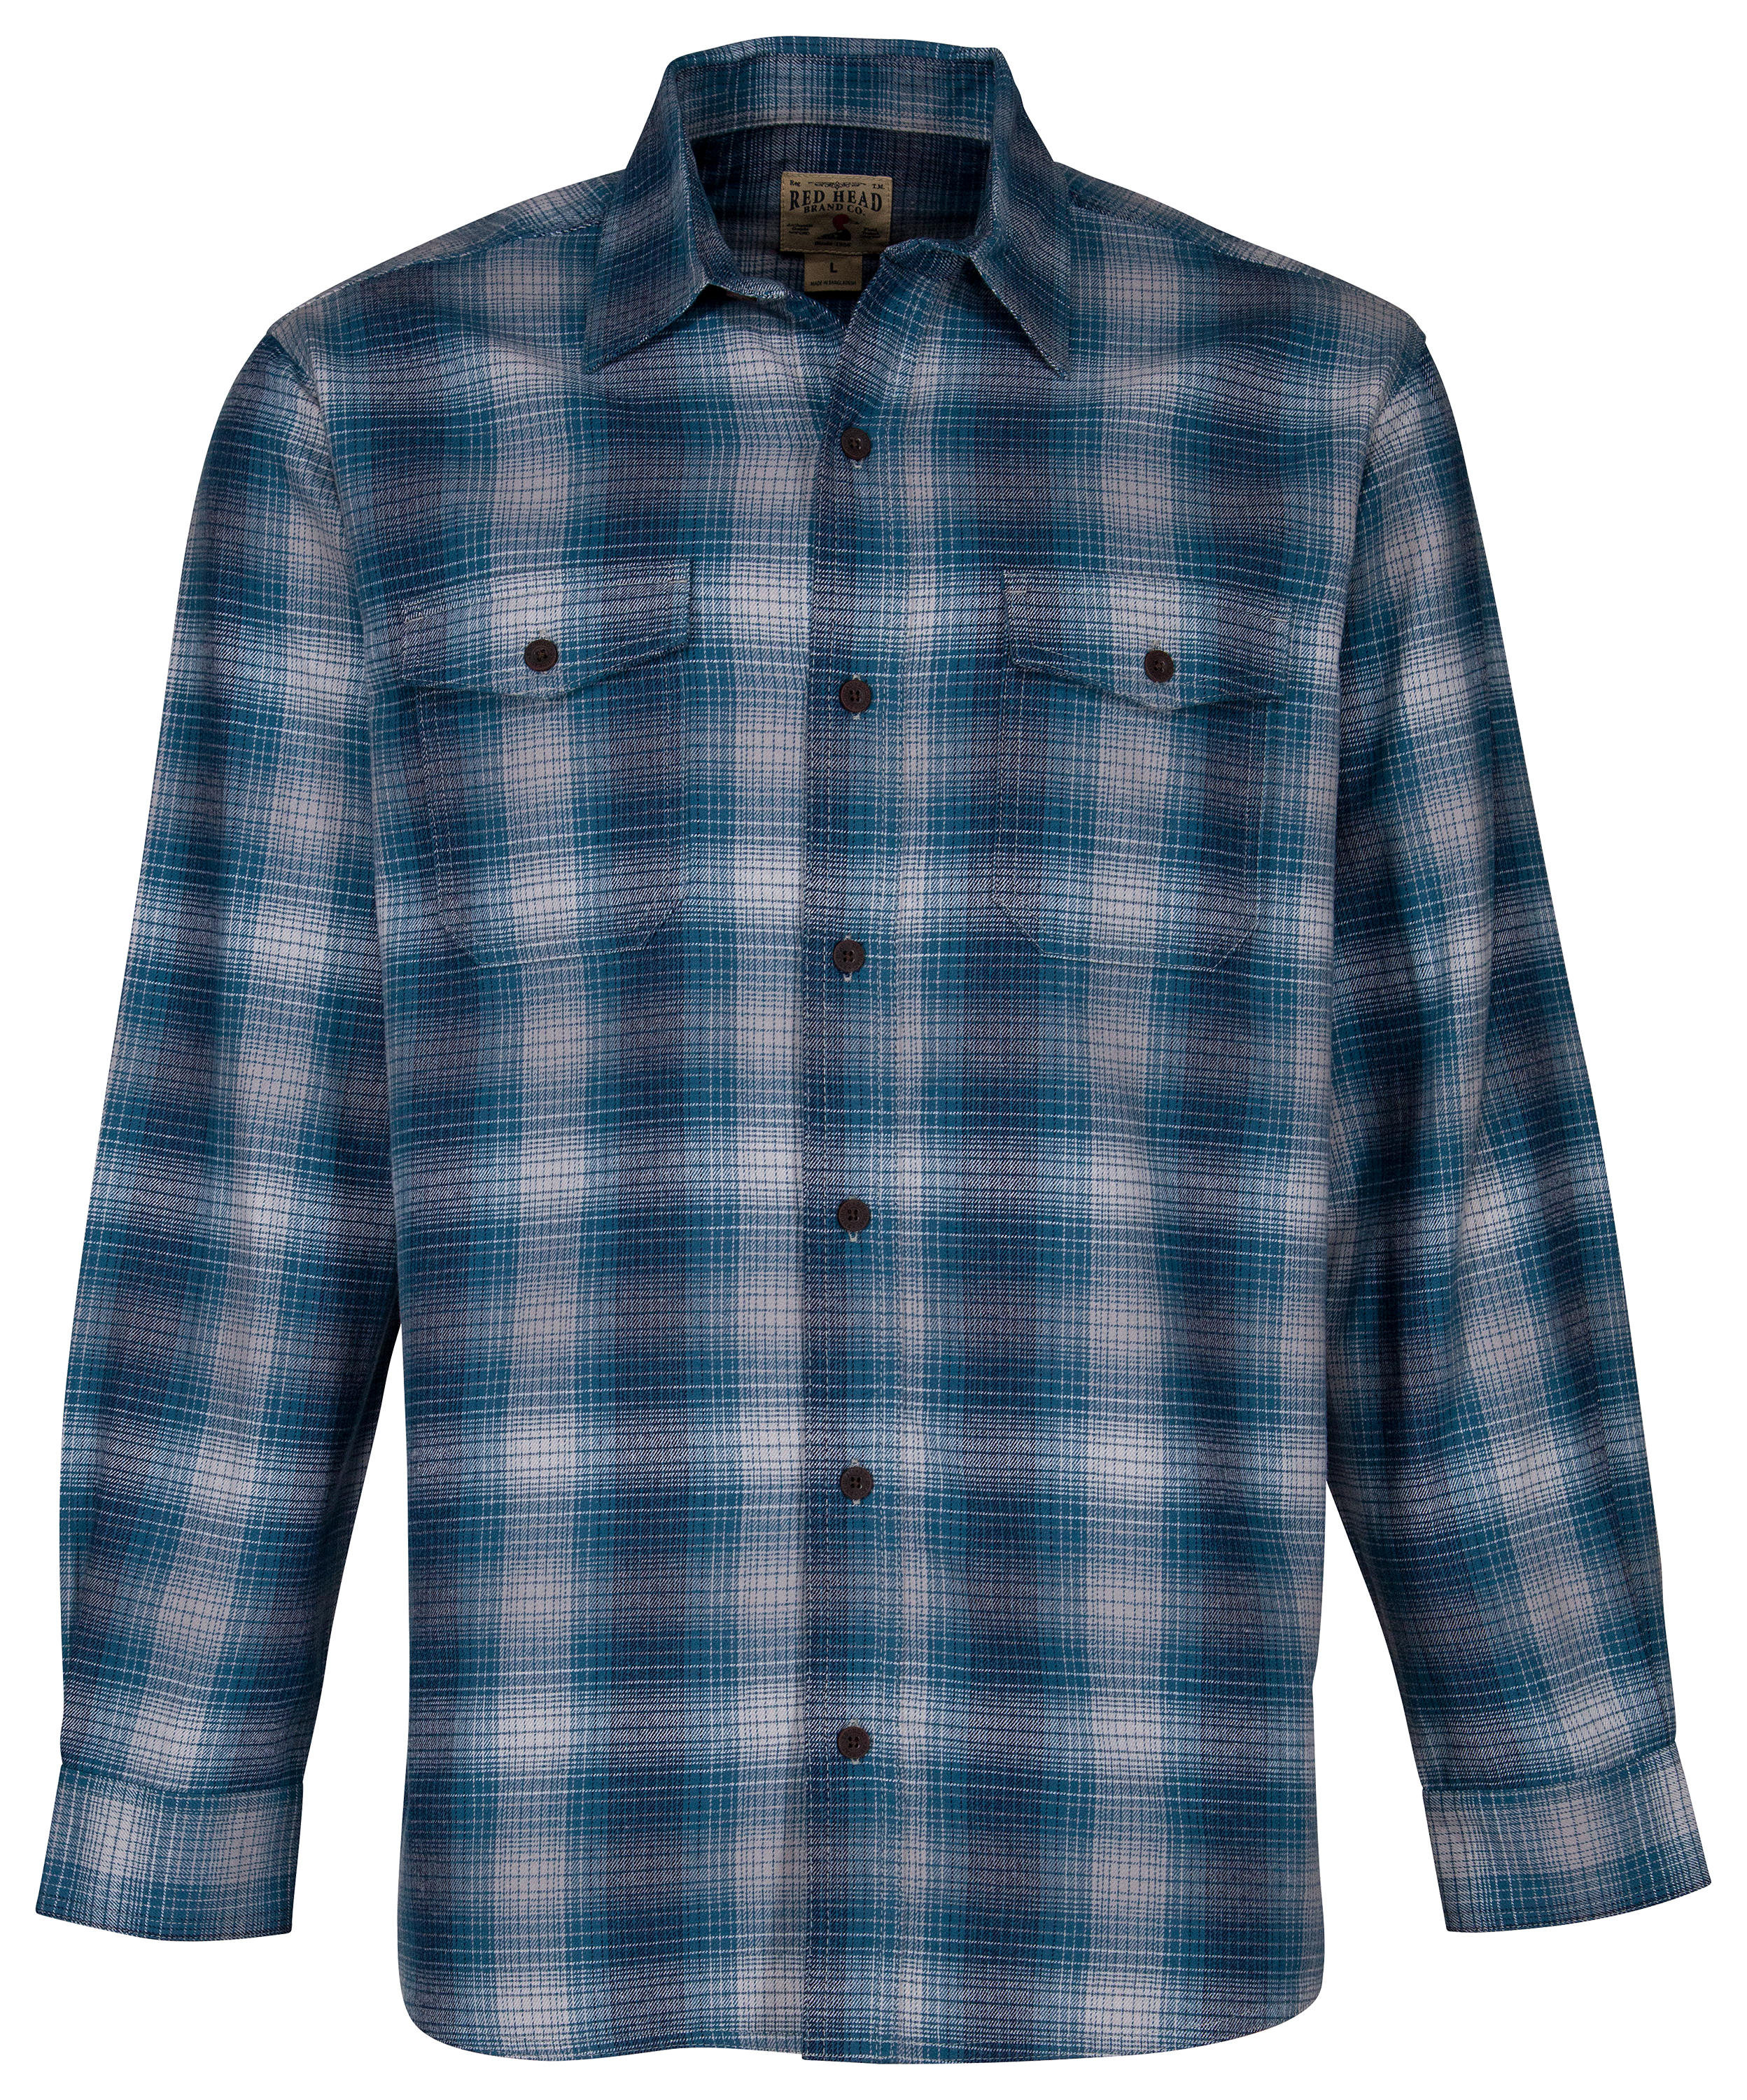 RedHead Bear Creek Plaid Flannel Long-Sleeve Shirt for Men - Blue Ombre Plaid - S